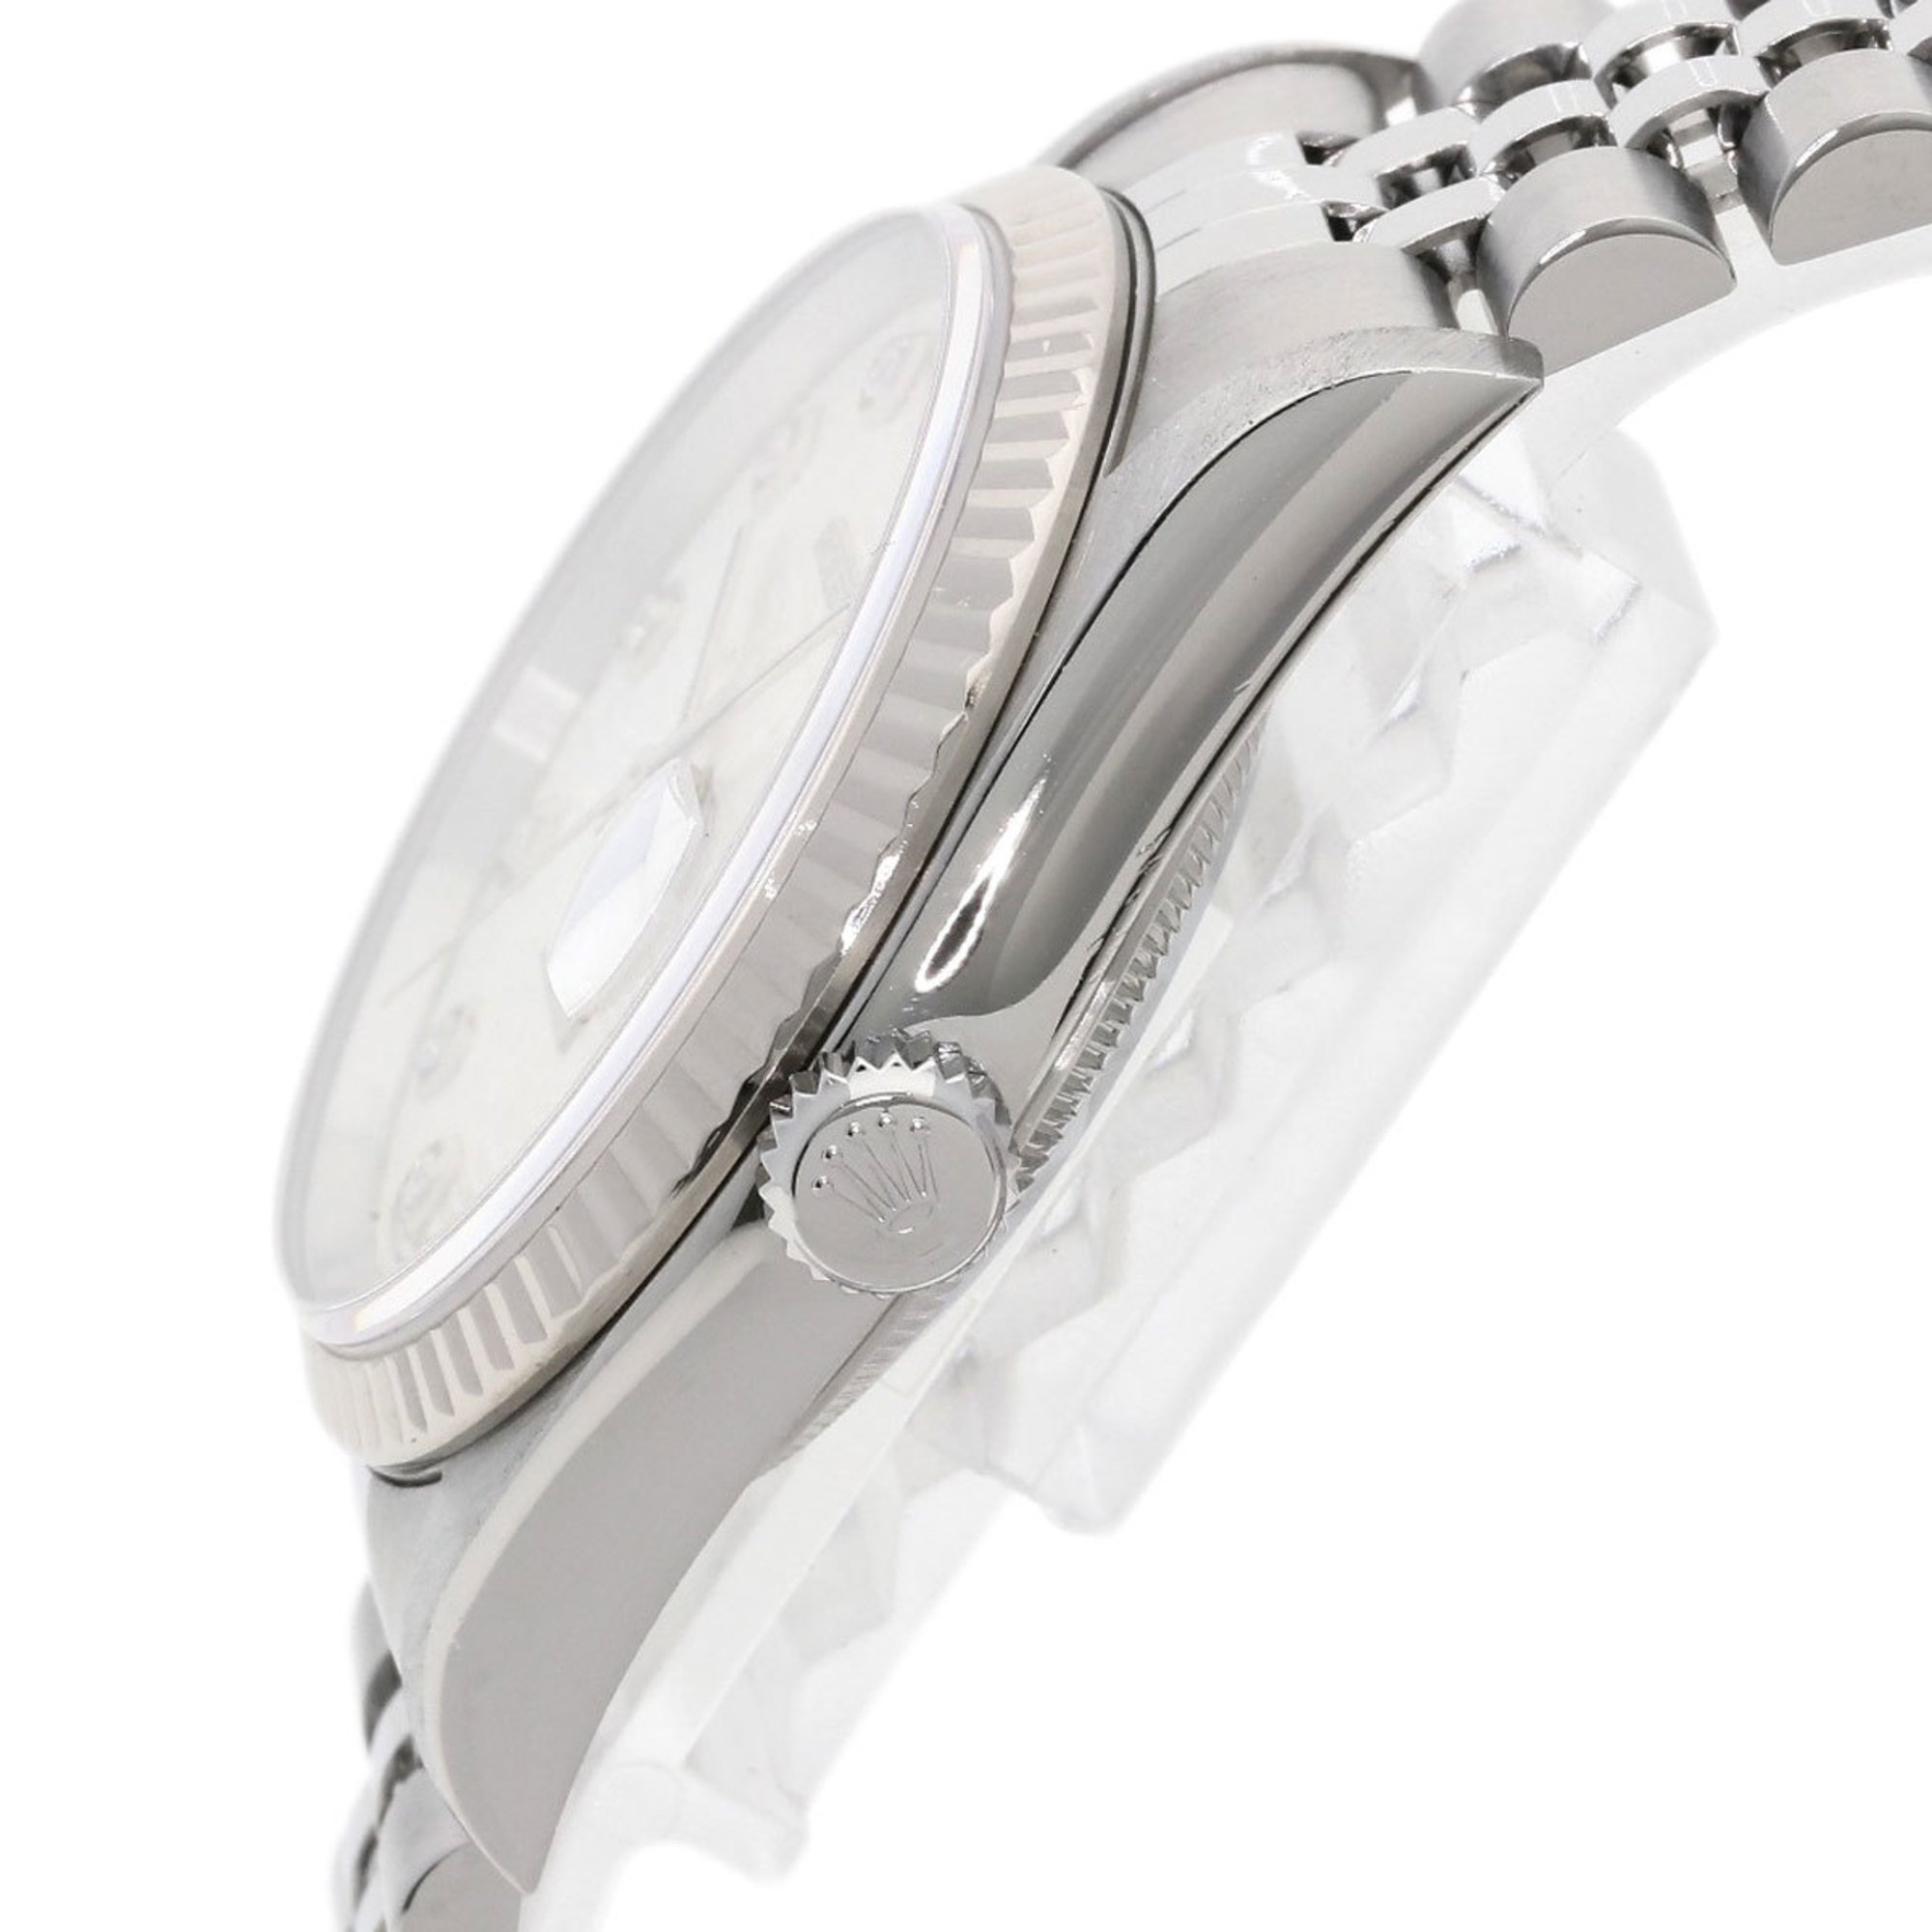 Rolex 16234G Datejust 10P Diamond Watch Stainless Steel SS K18WG Men's ROLEX